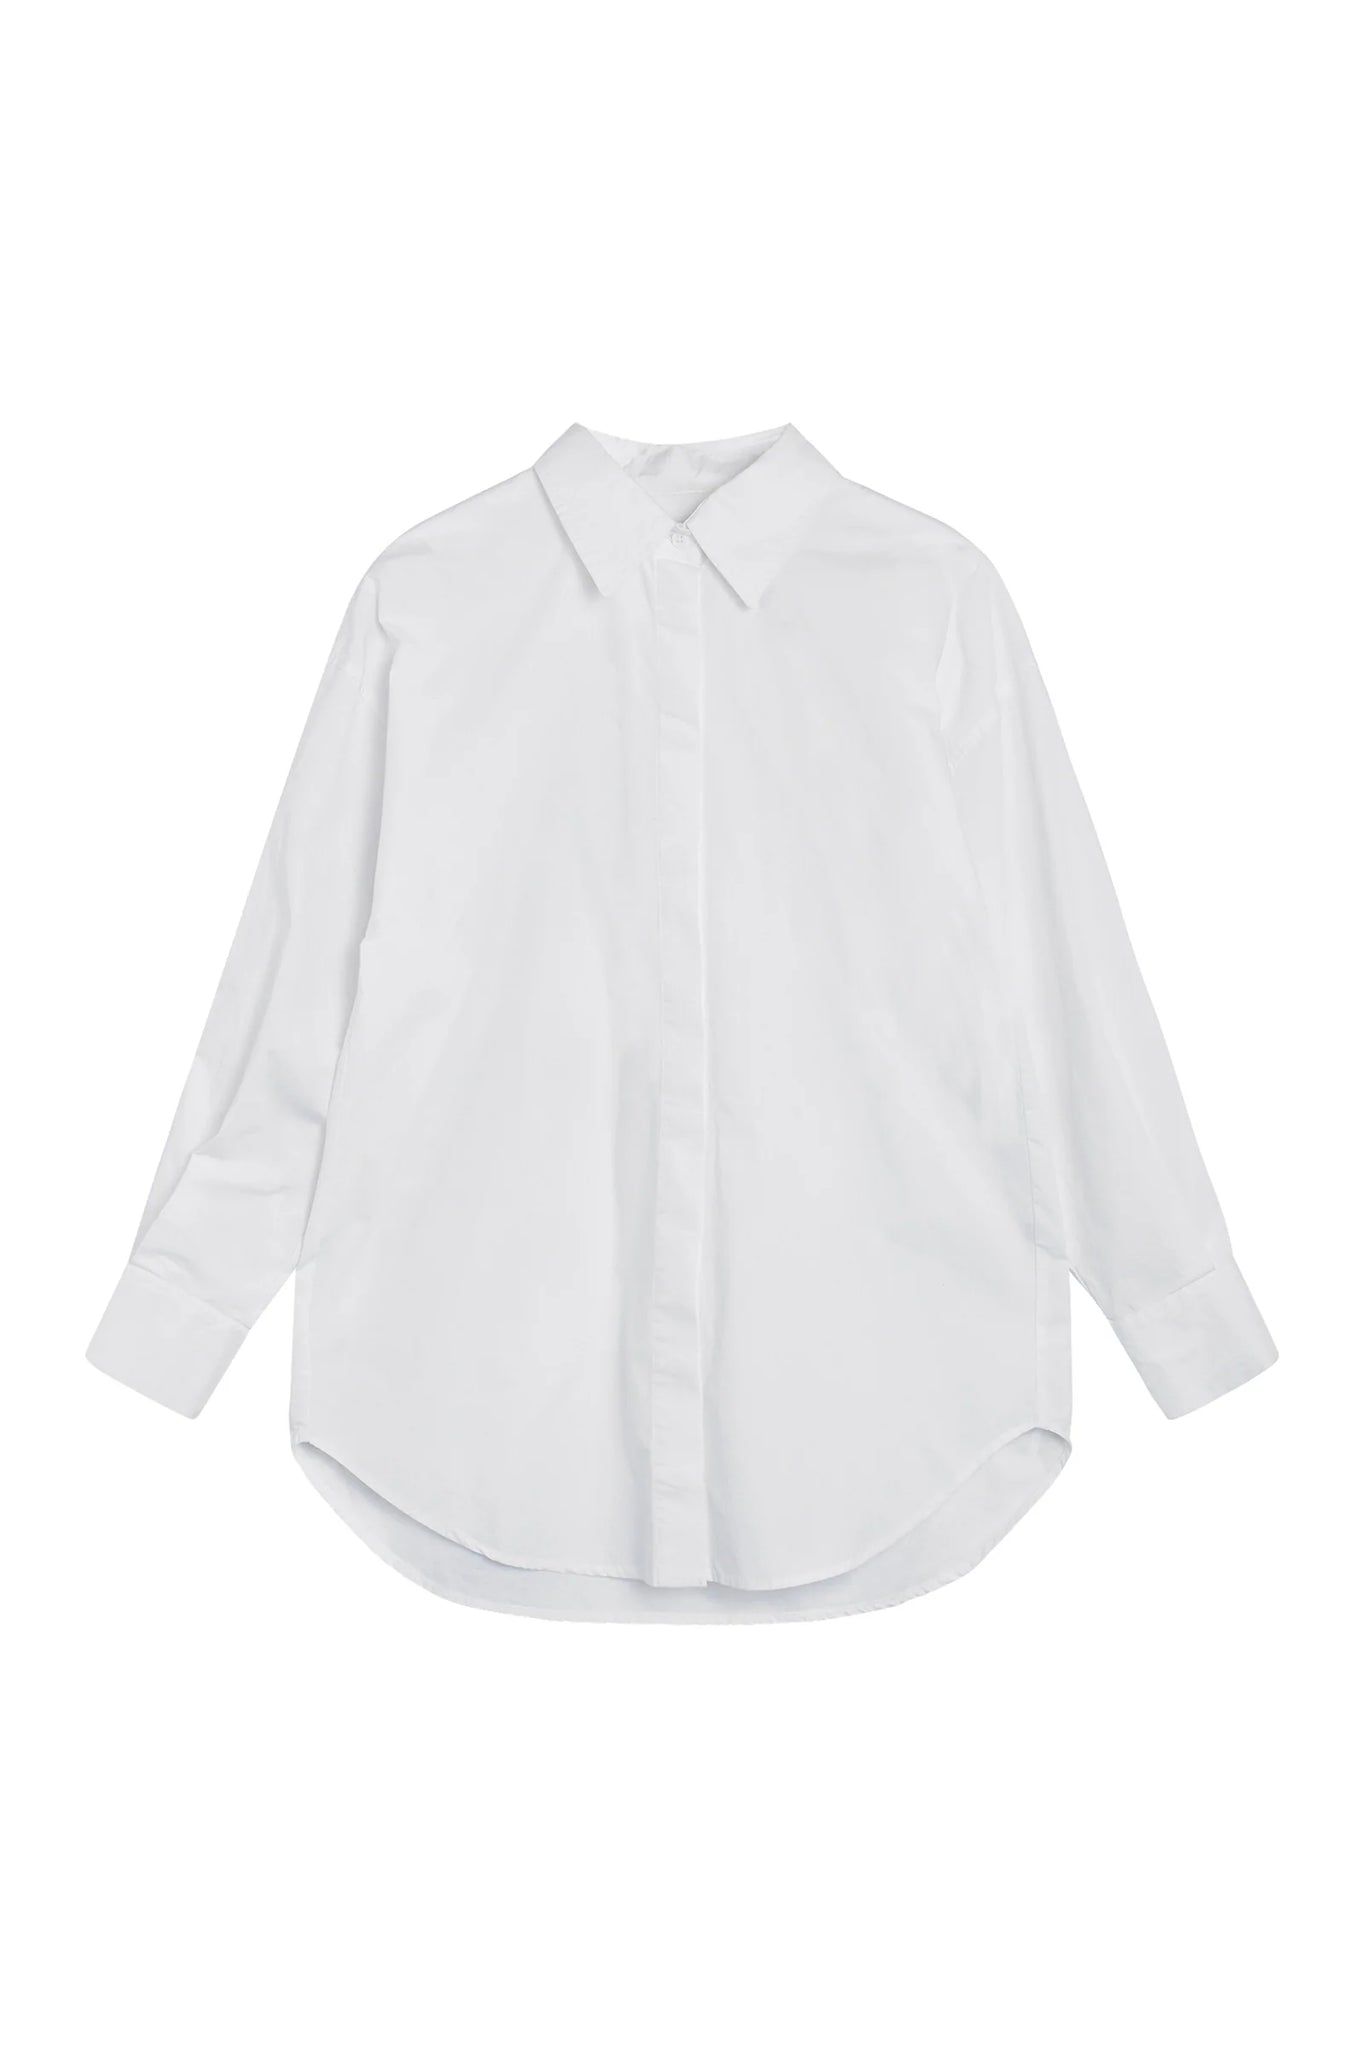 Tippi shirt in white